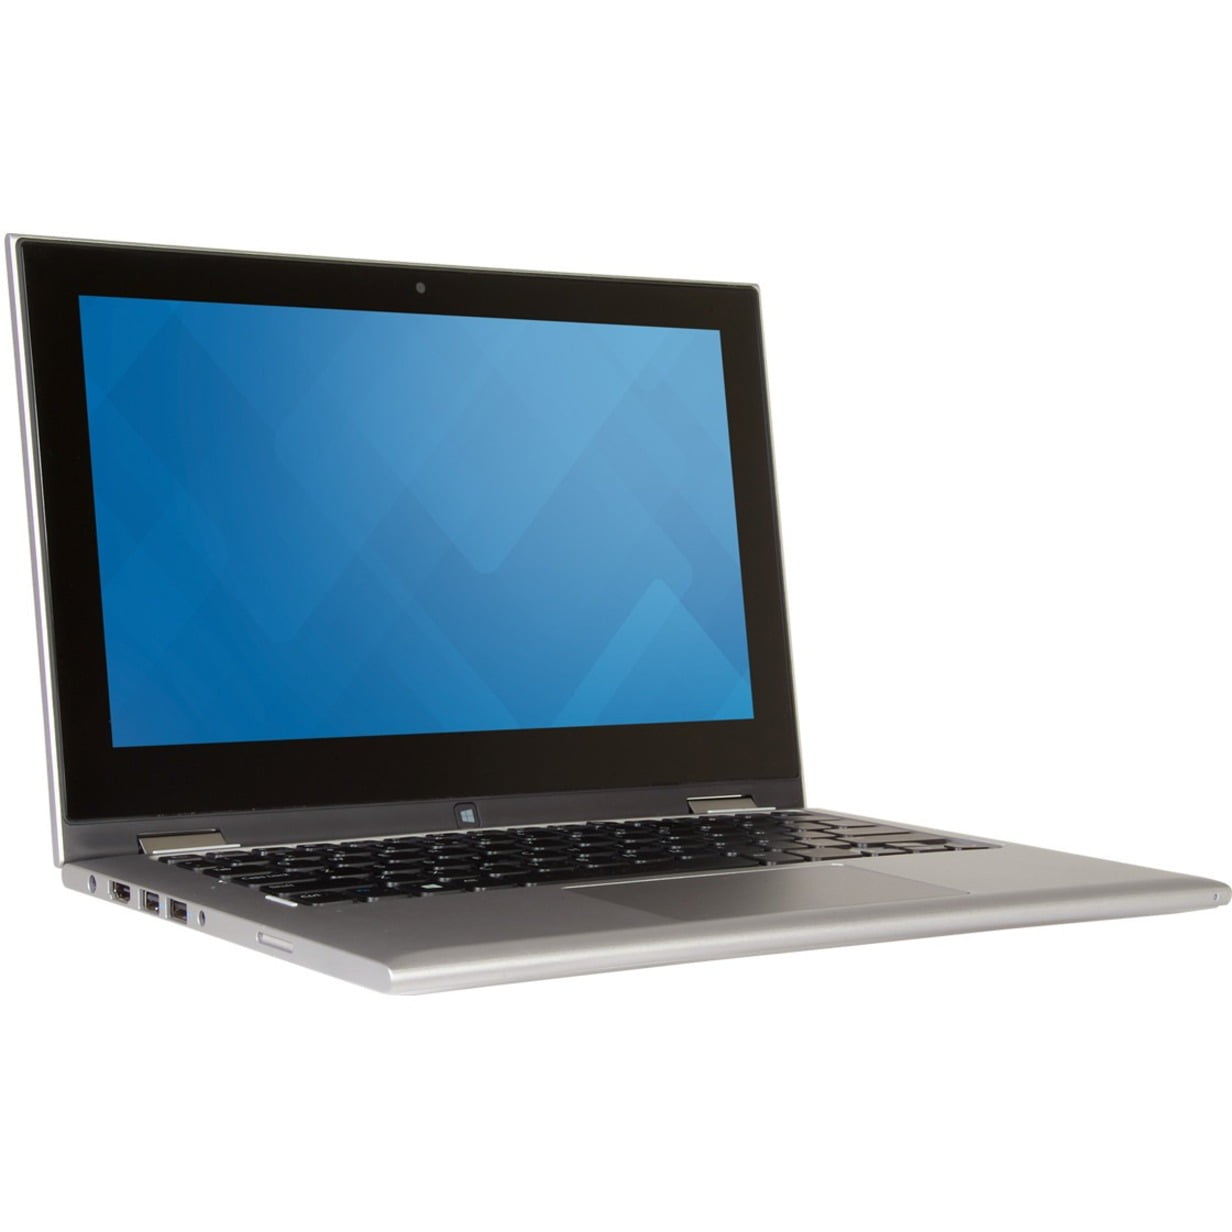 Dell Inspiron 11.6" Touchscreen 2-in-1 Laptop, Intel Pentium N3700, 4GB